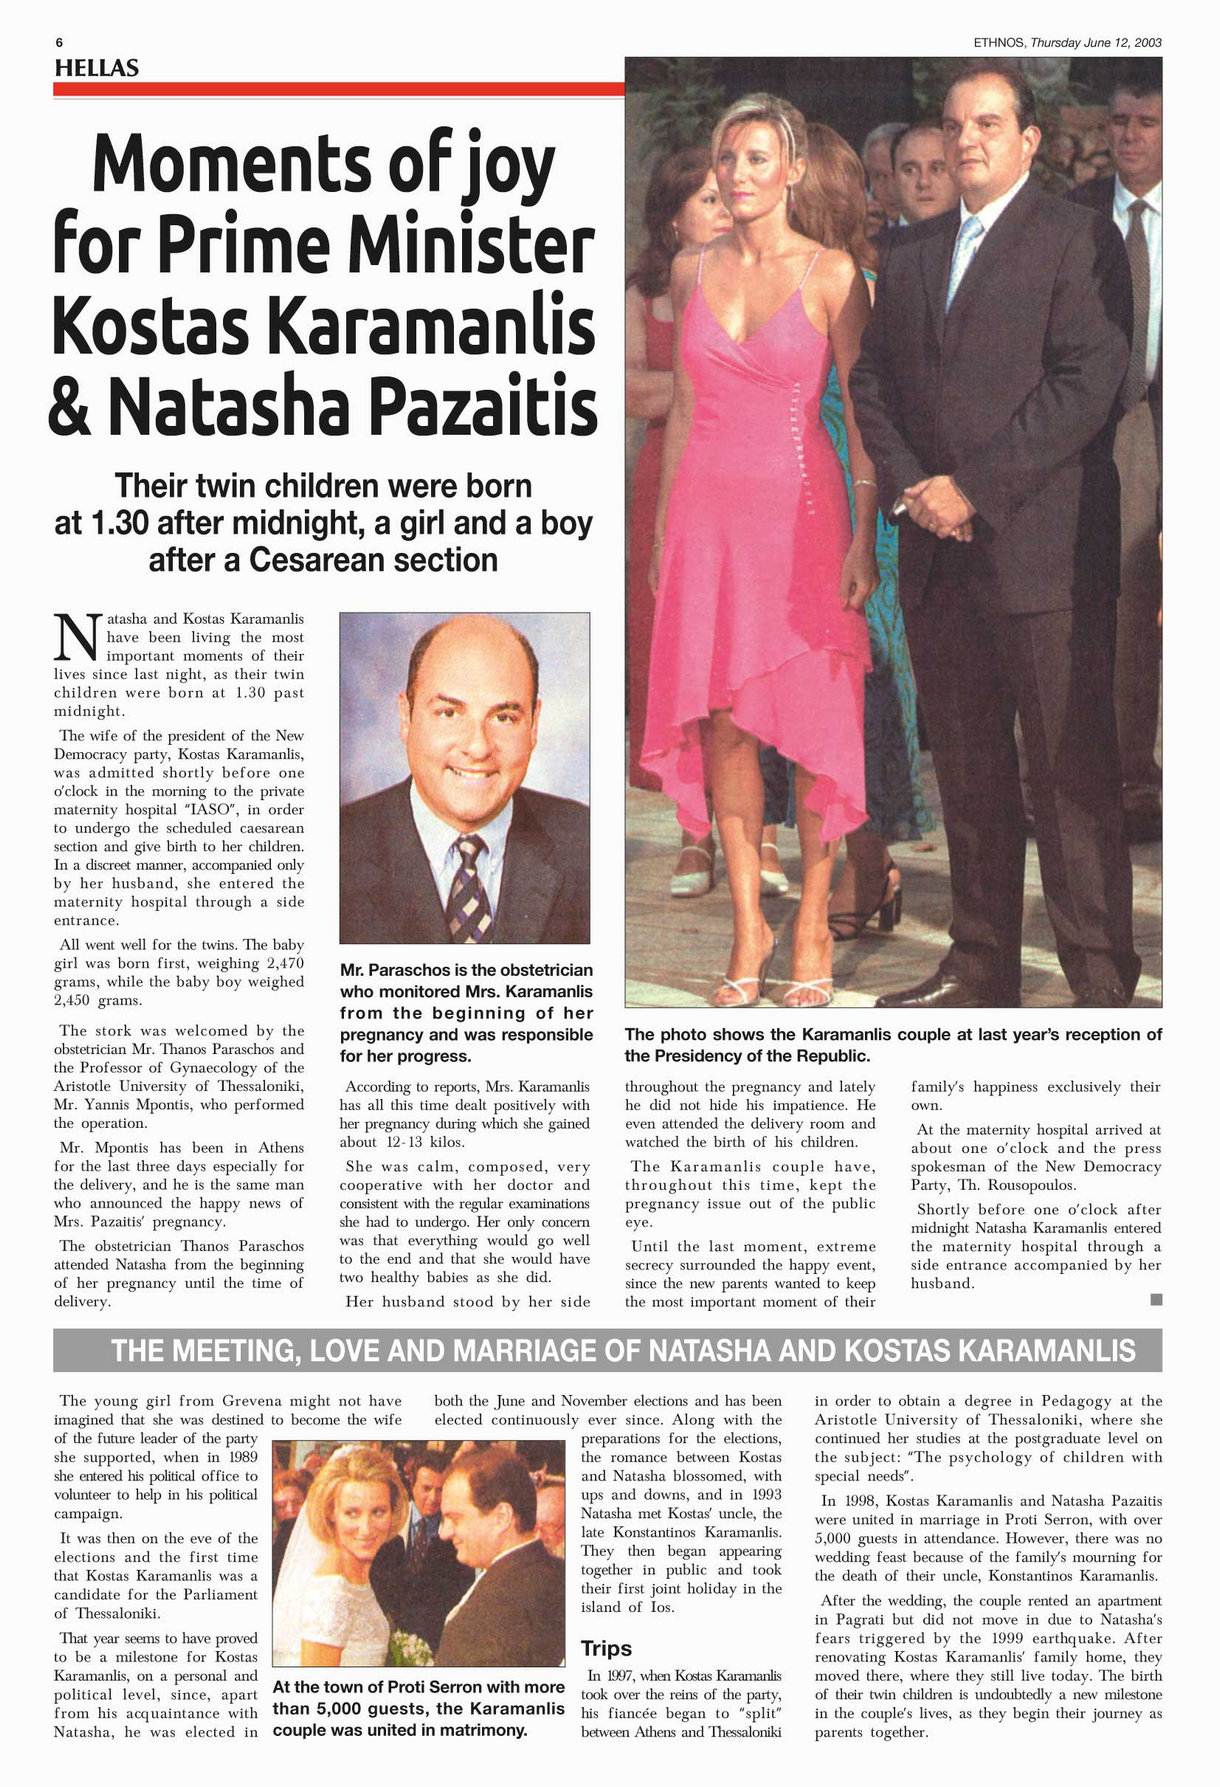 twins for prime minister kostas karamanlis